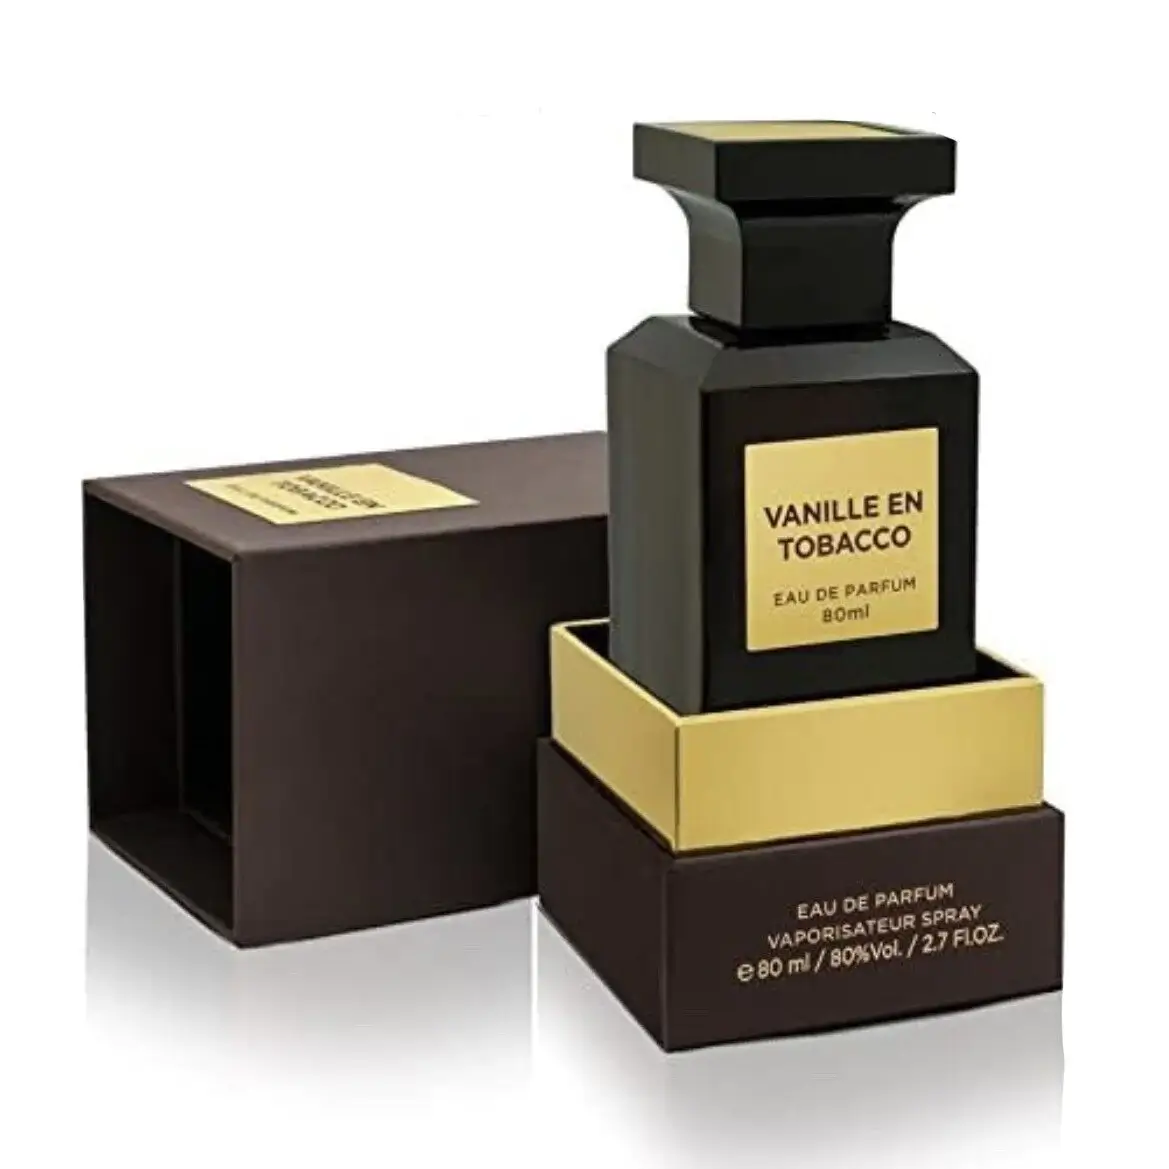 Vanille En Tobacco Perfume / Eau De Parfum 100Ml By Fragrance World (Inspired By Tobacco Vanilla - Tomford)